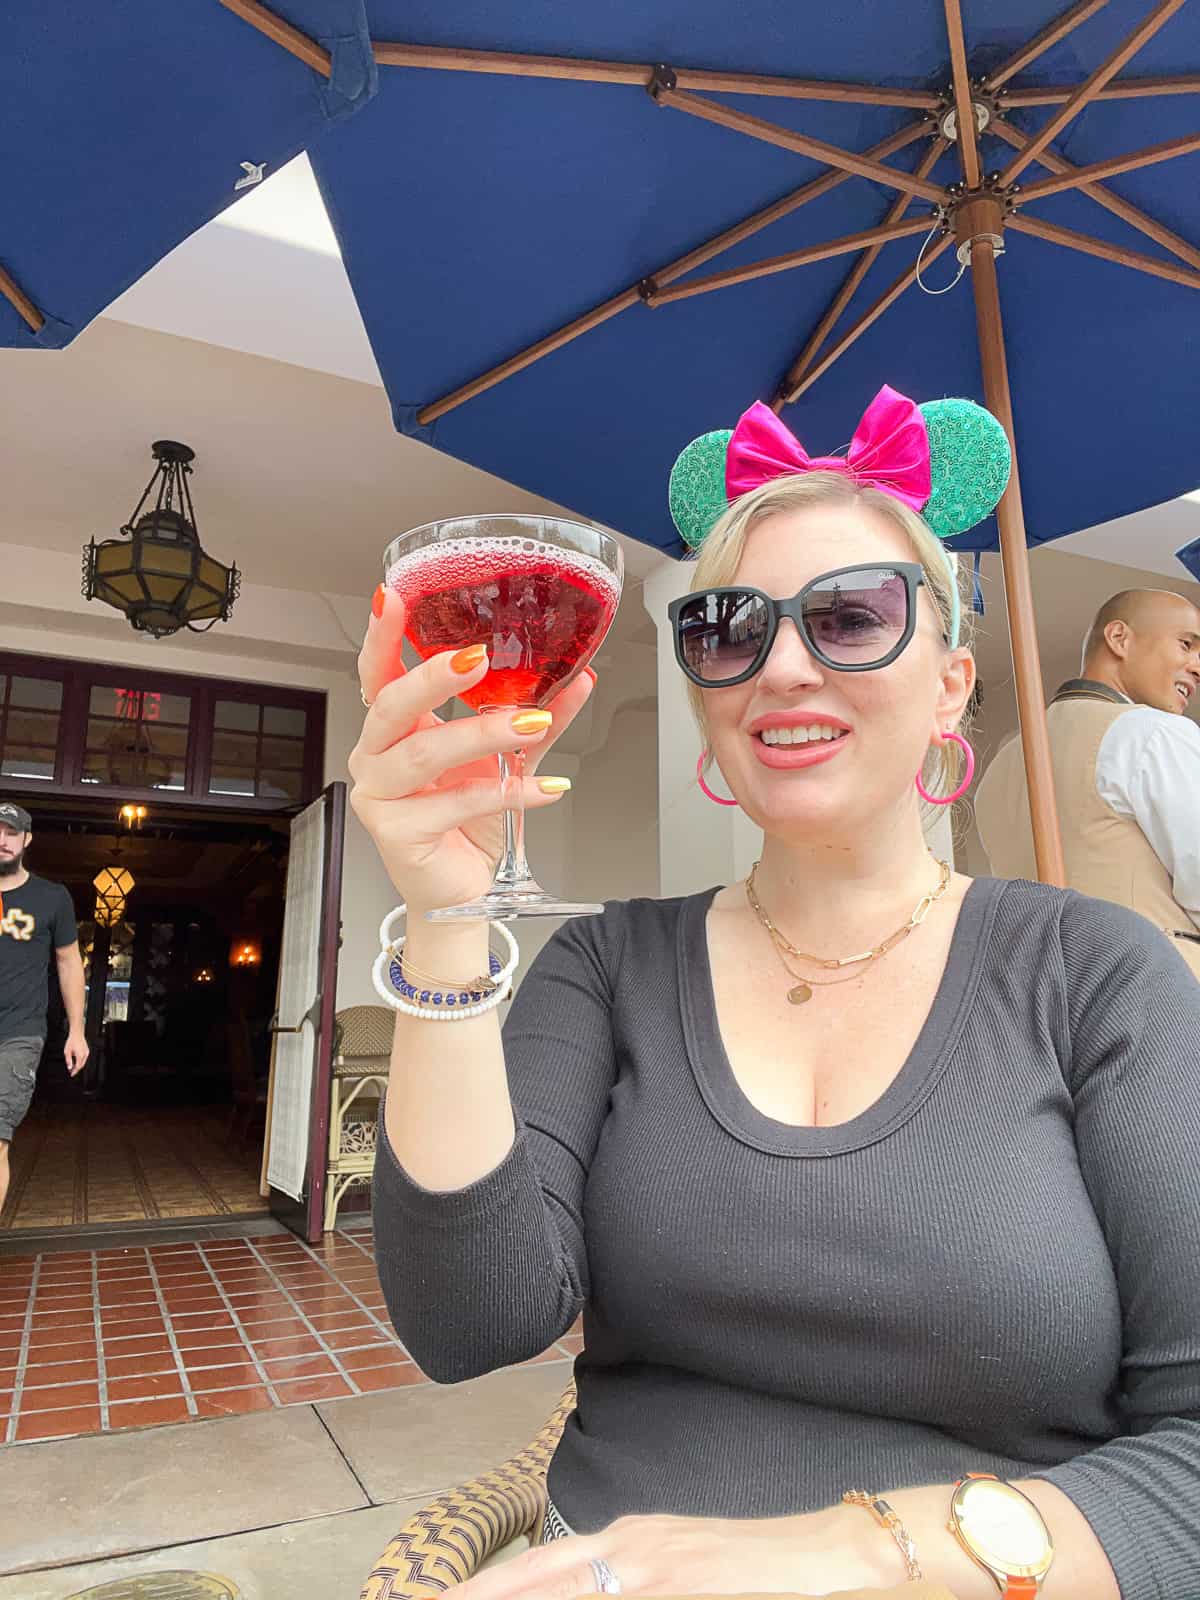 Jenna Passaro Disneyland Food Blogger holding Poison Apple Martini served during Halloween at Disneyland